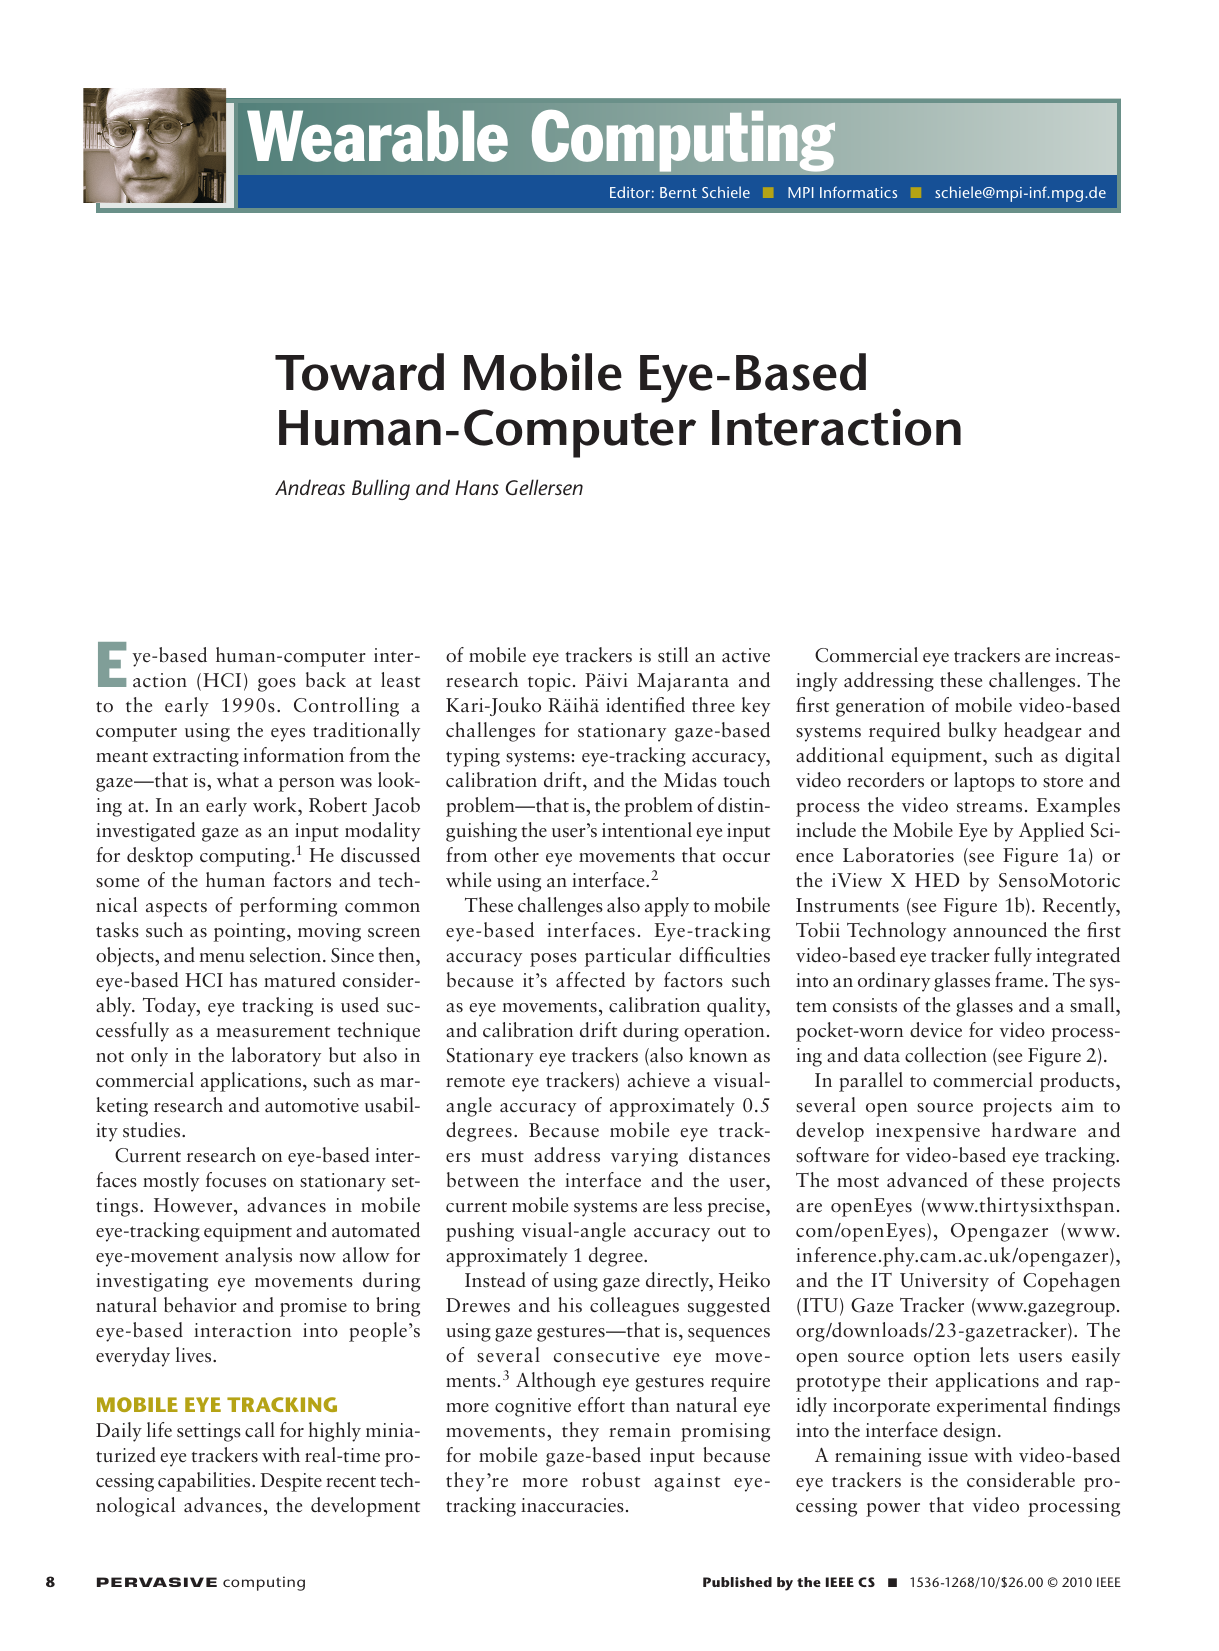 Toward Mobile Eye-Based Human-Computer Interaction